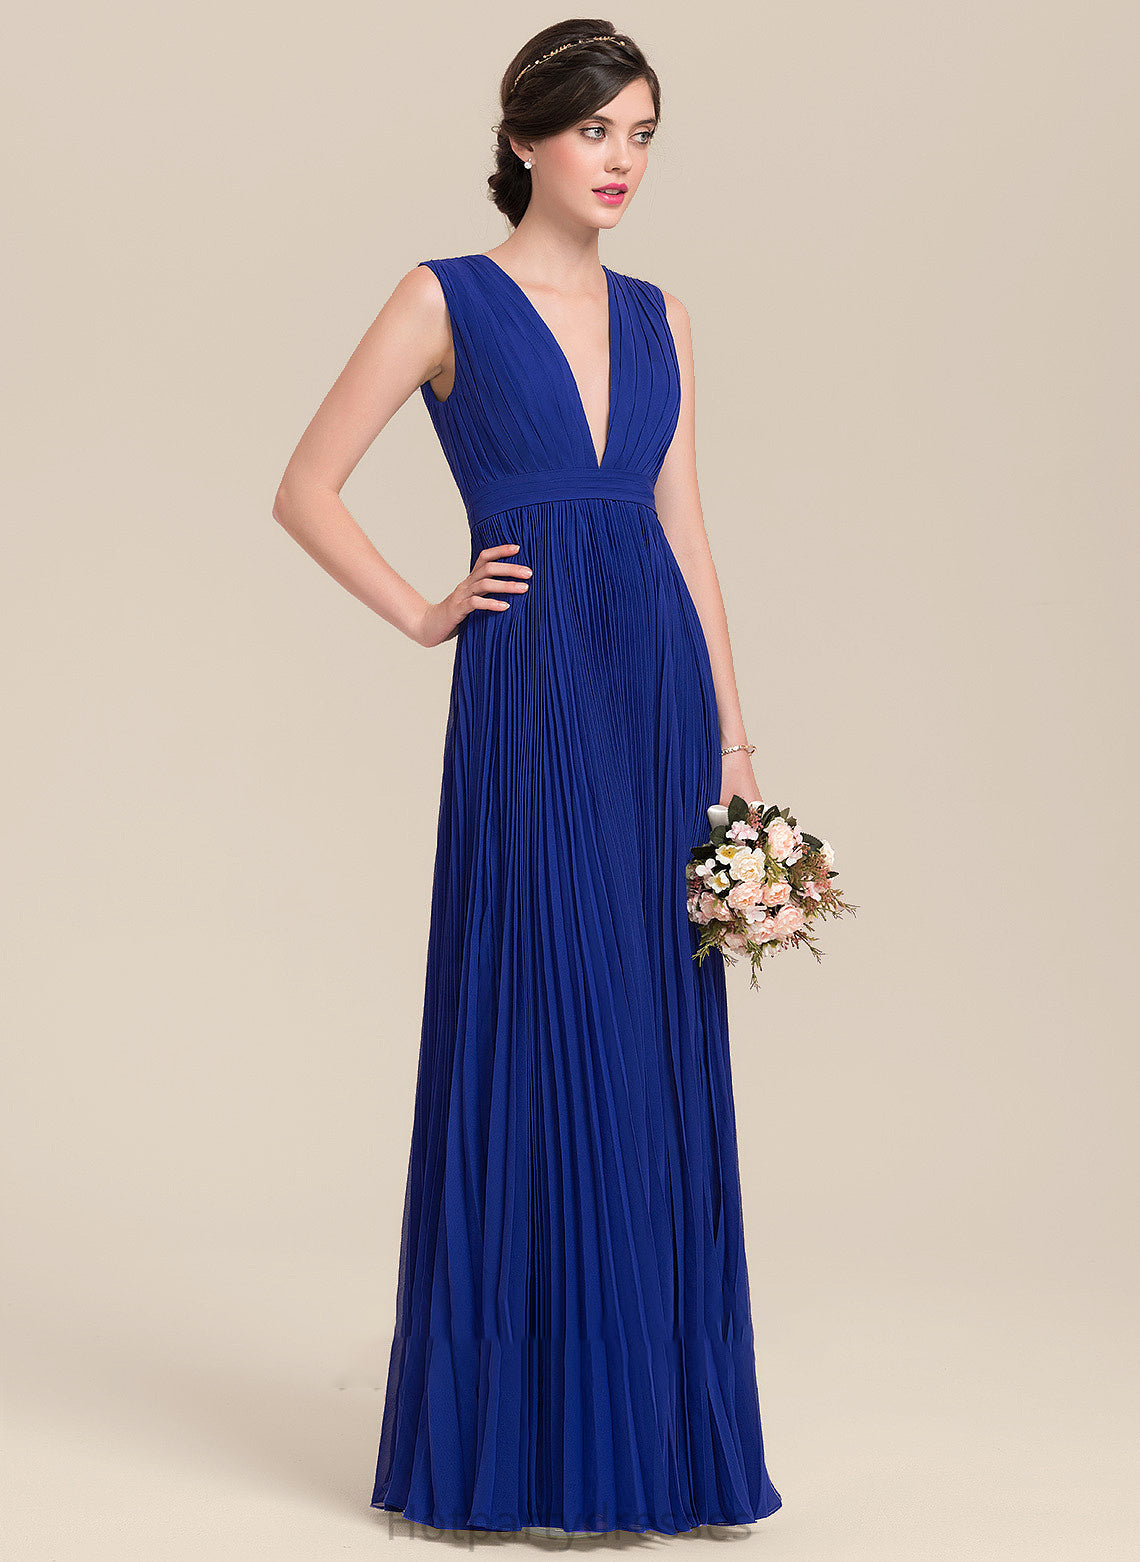 Length A-Line Silhouette Fabric Embellishment Floor-Length Bow(s) Neckline V-neck Pleated Karli Sleeveless Bridesmaid Dresses